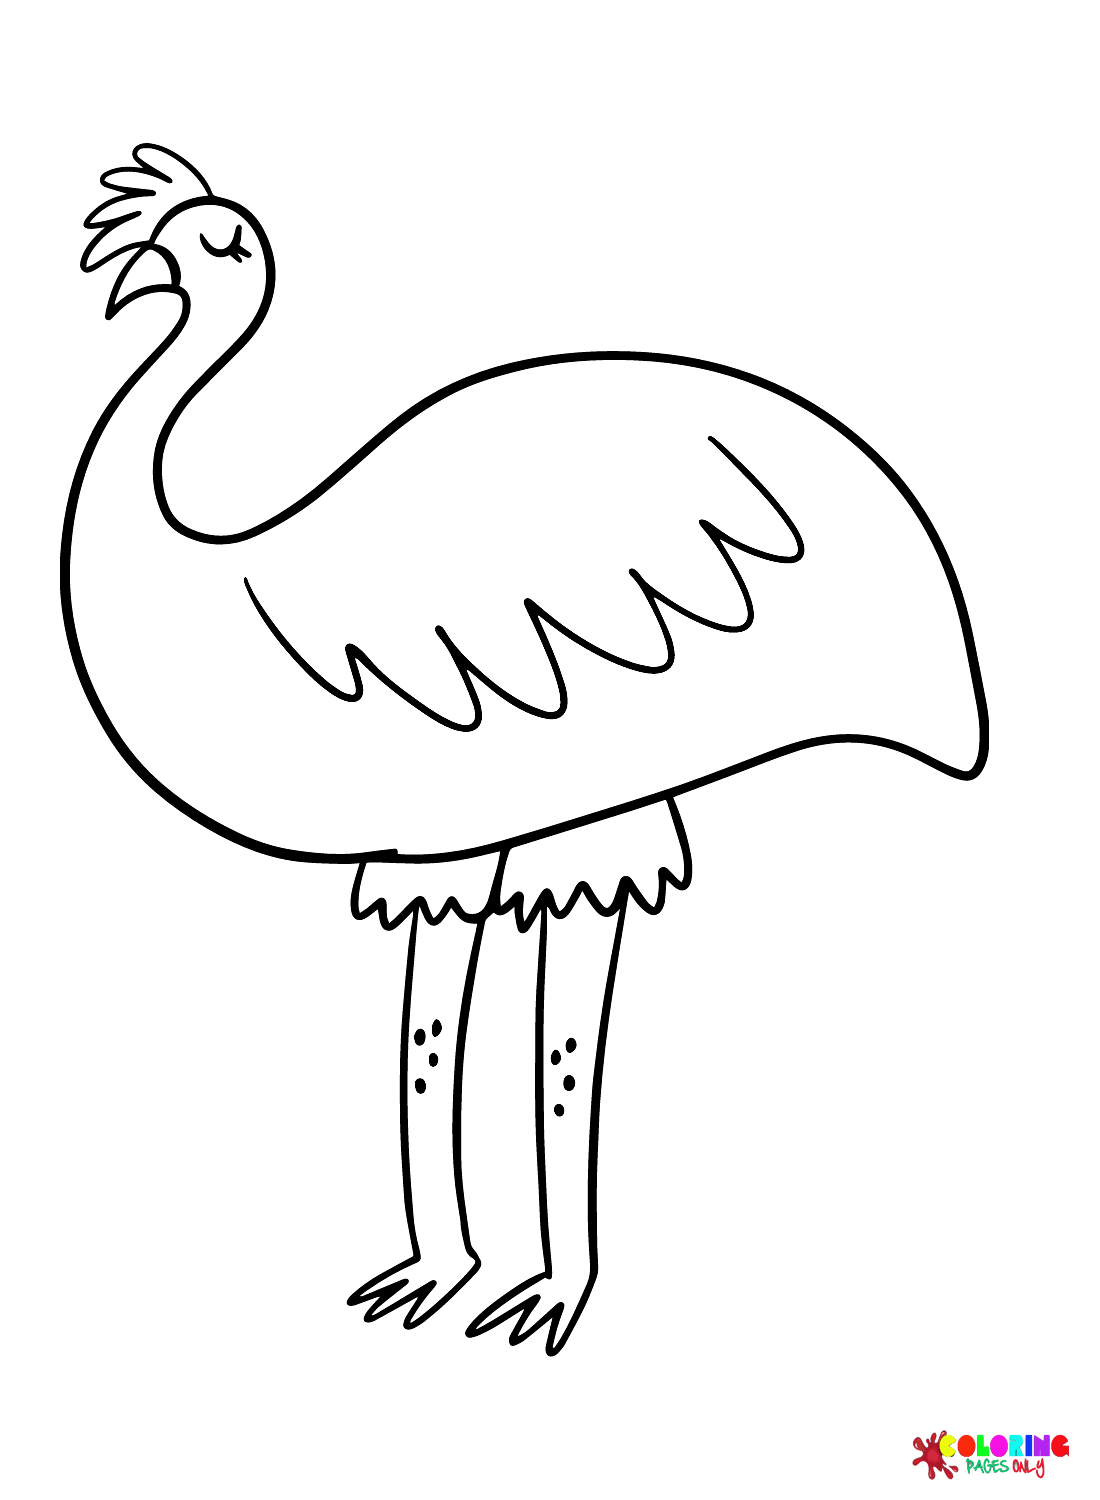 Emu color Sheet from Emu